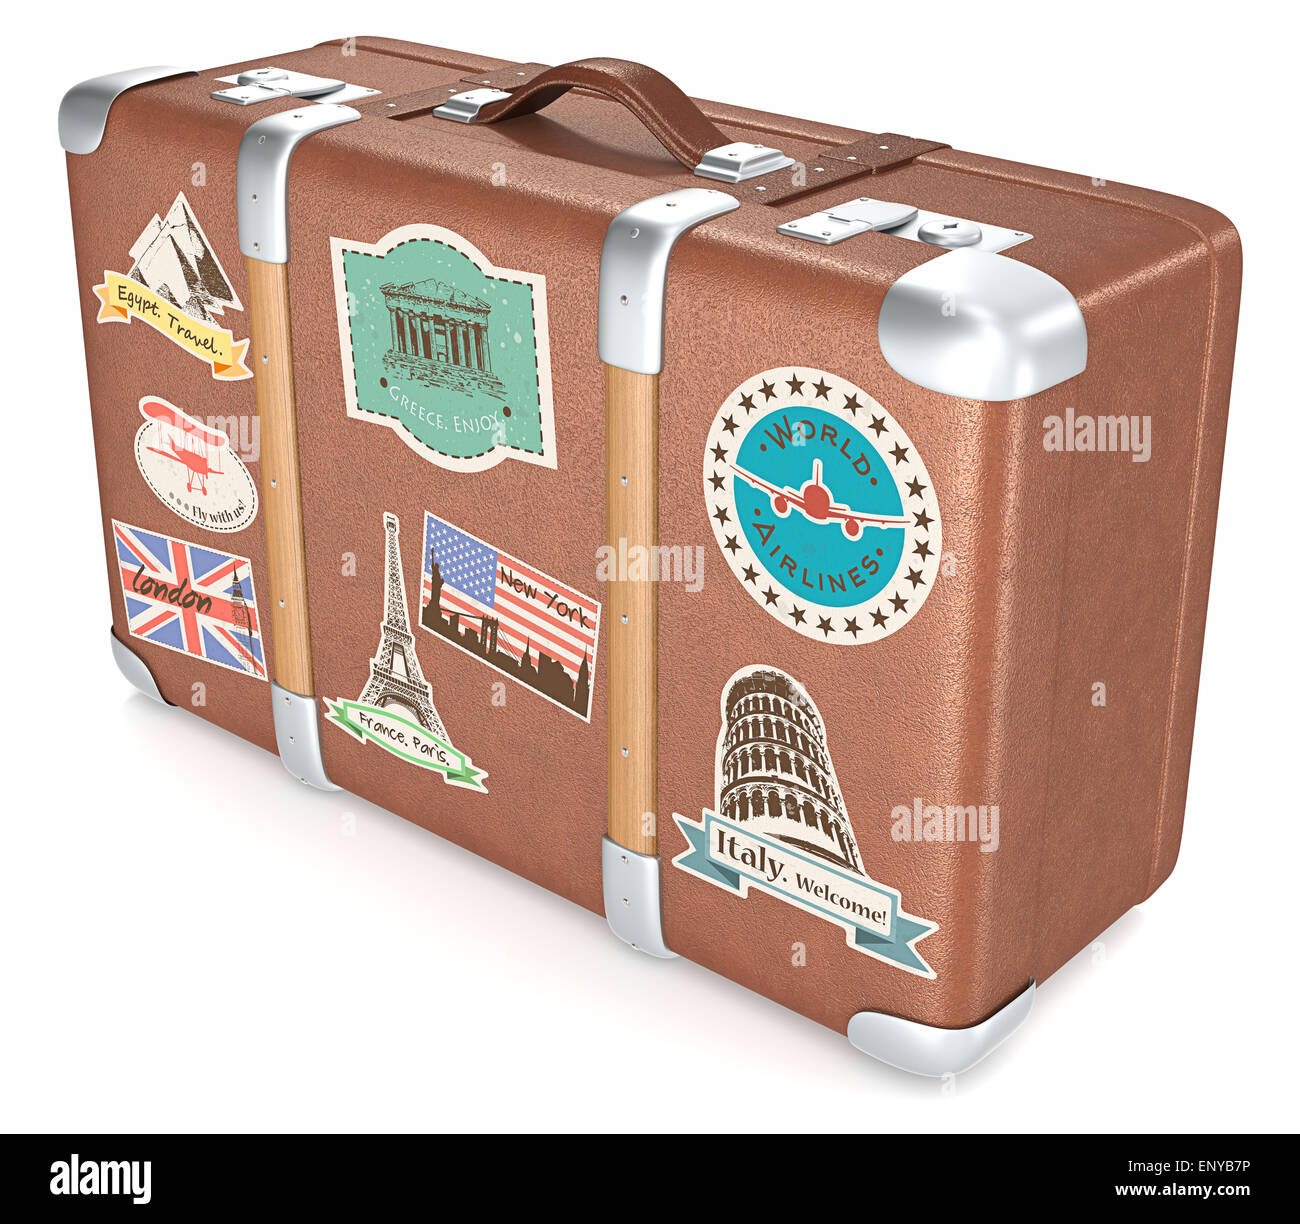 100 Luggage Suitcase Retro Vinyl Stickers Vintage City Names World Travel  UK NEW 